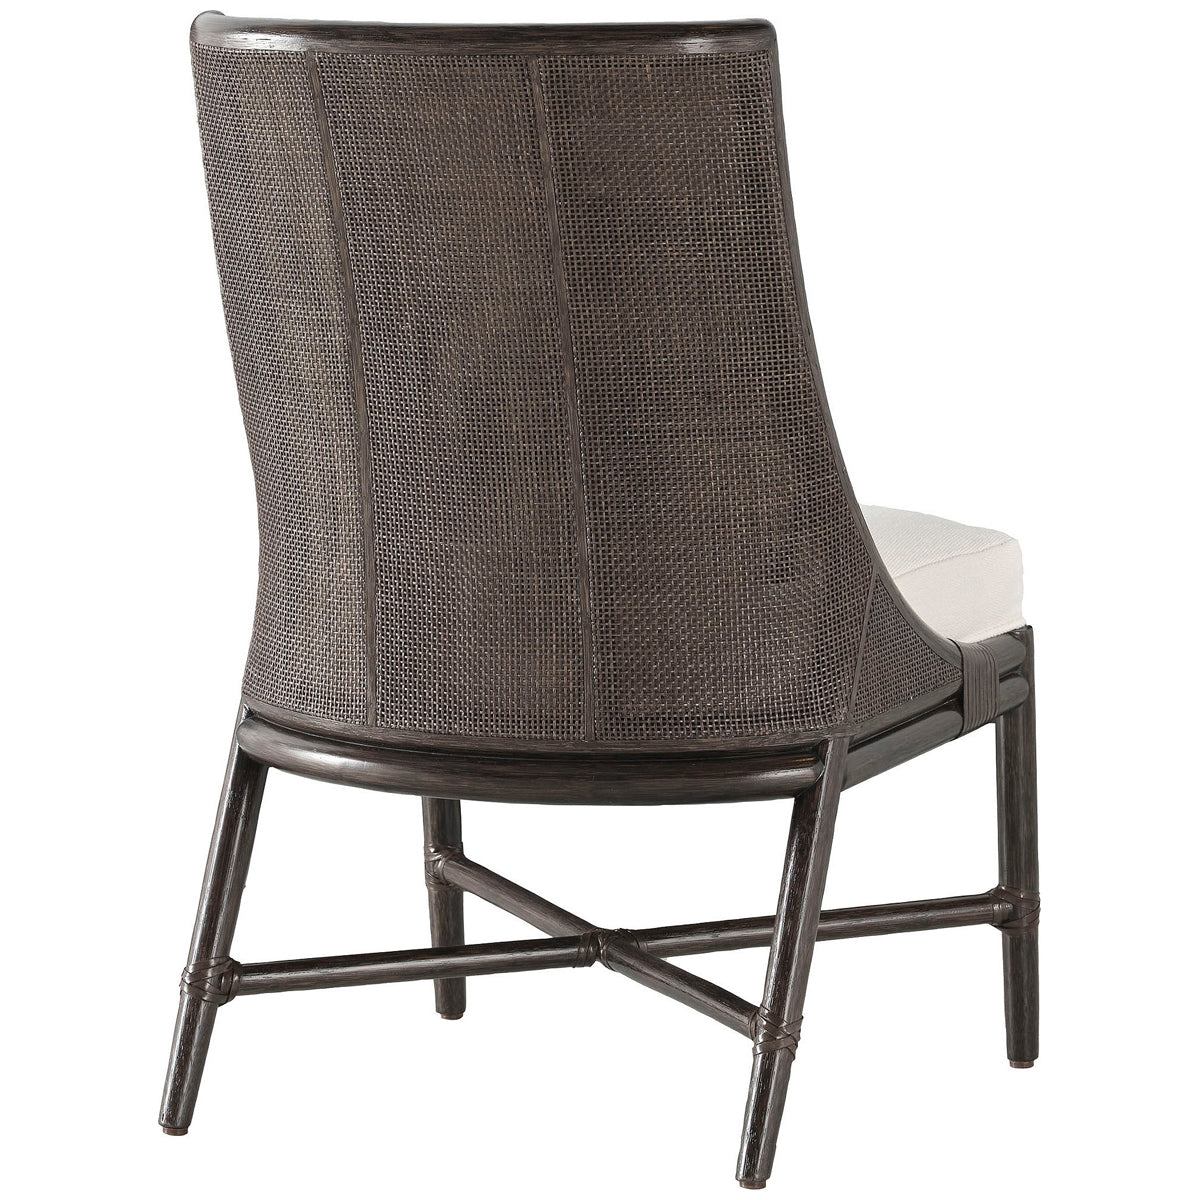 Baker Furniture Lampasas Side Chair MCA2346